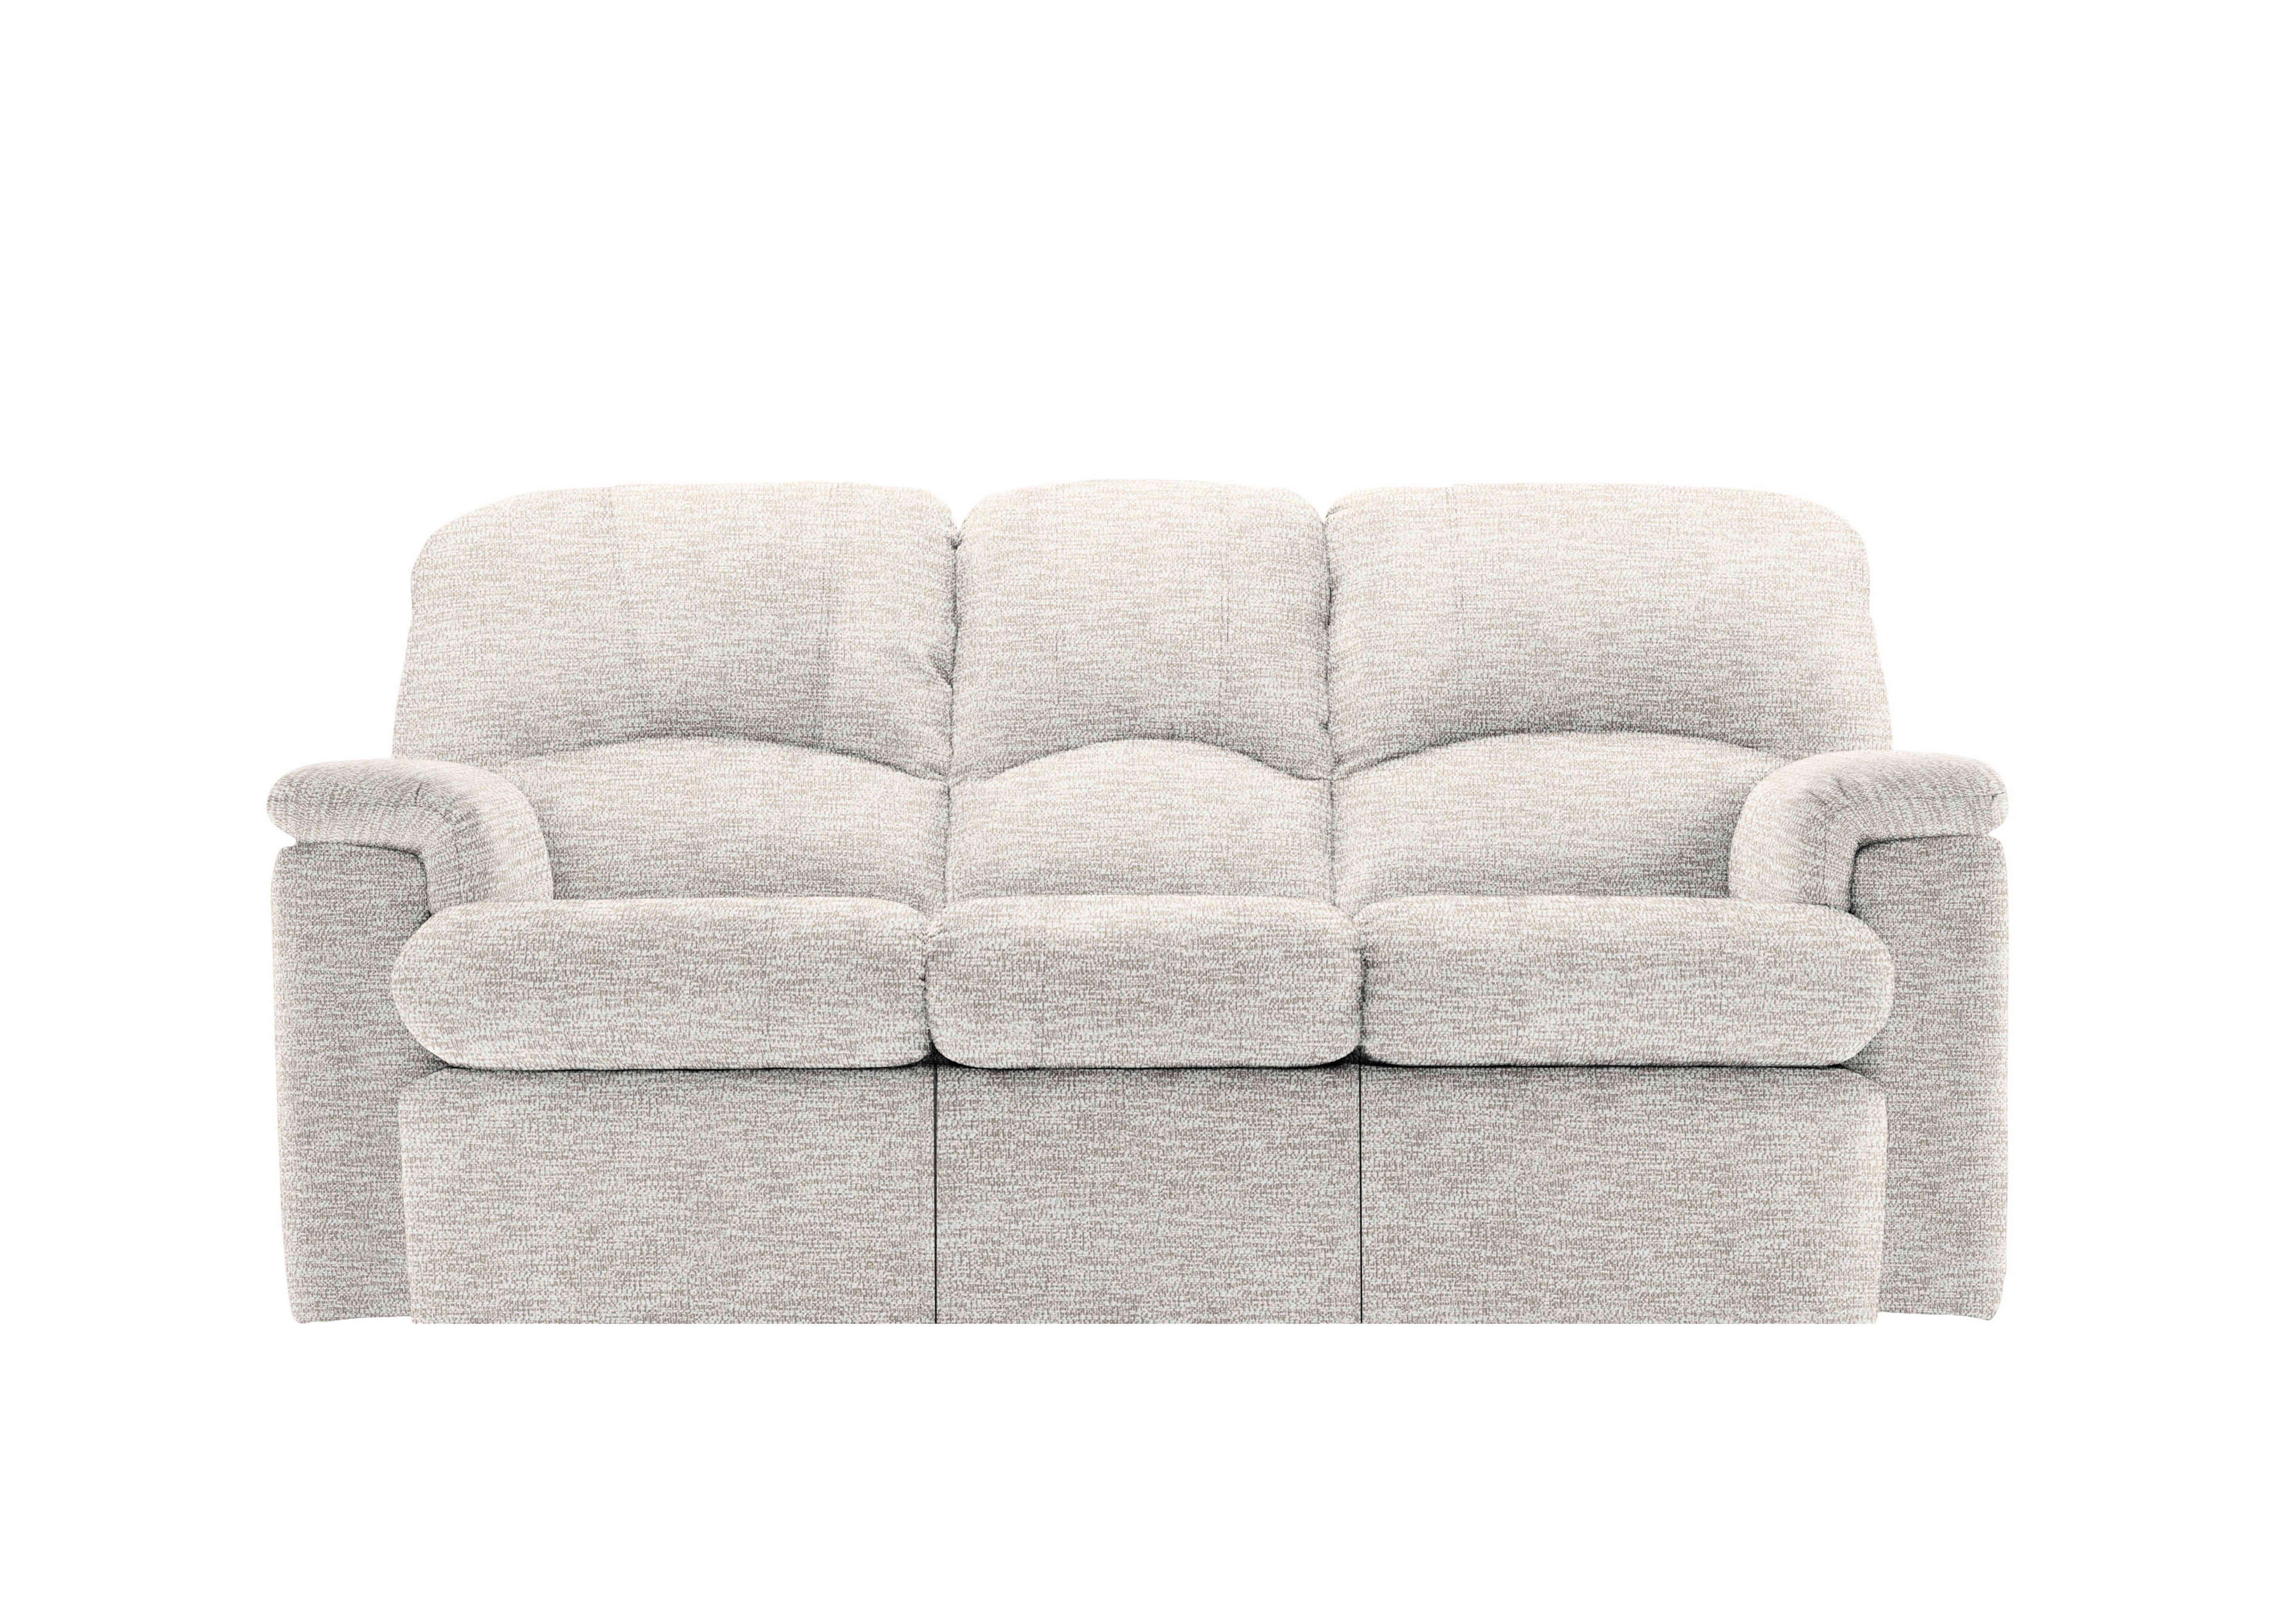 Chloe 3 Seater Fabric Sofa in C931 Rush Cream on Furniture Village